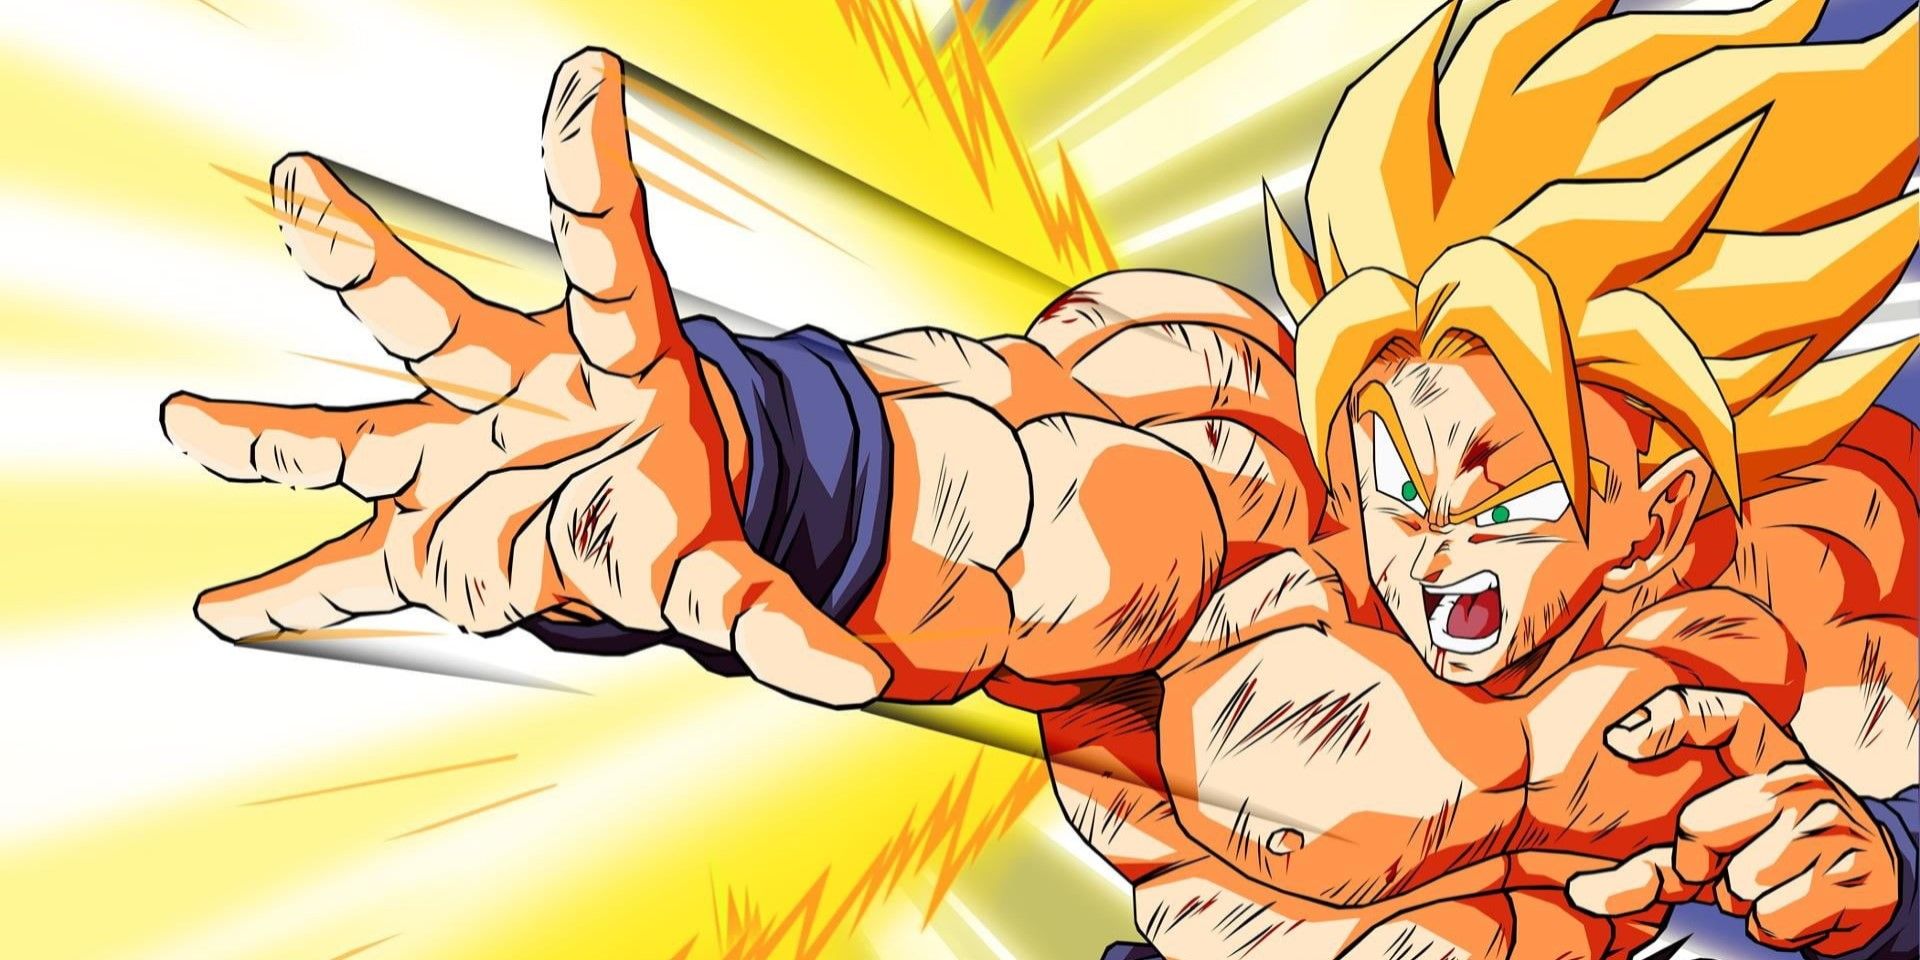 An image of Goku in Super Saiyan form